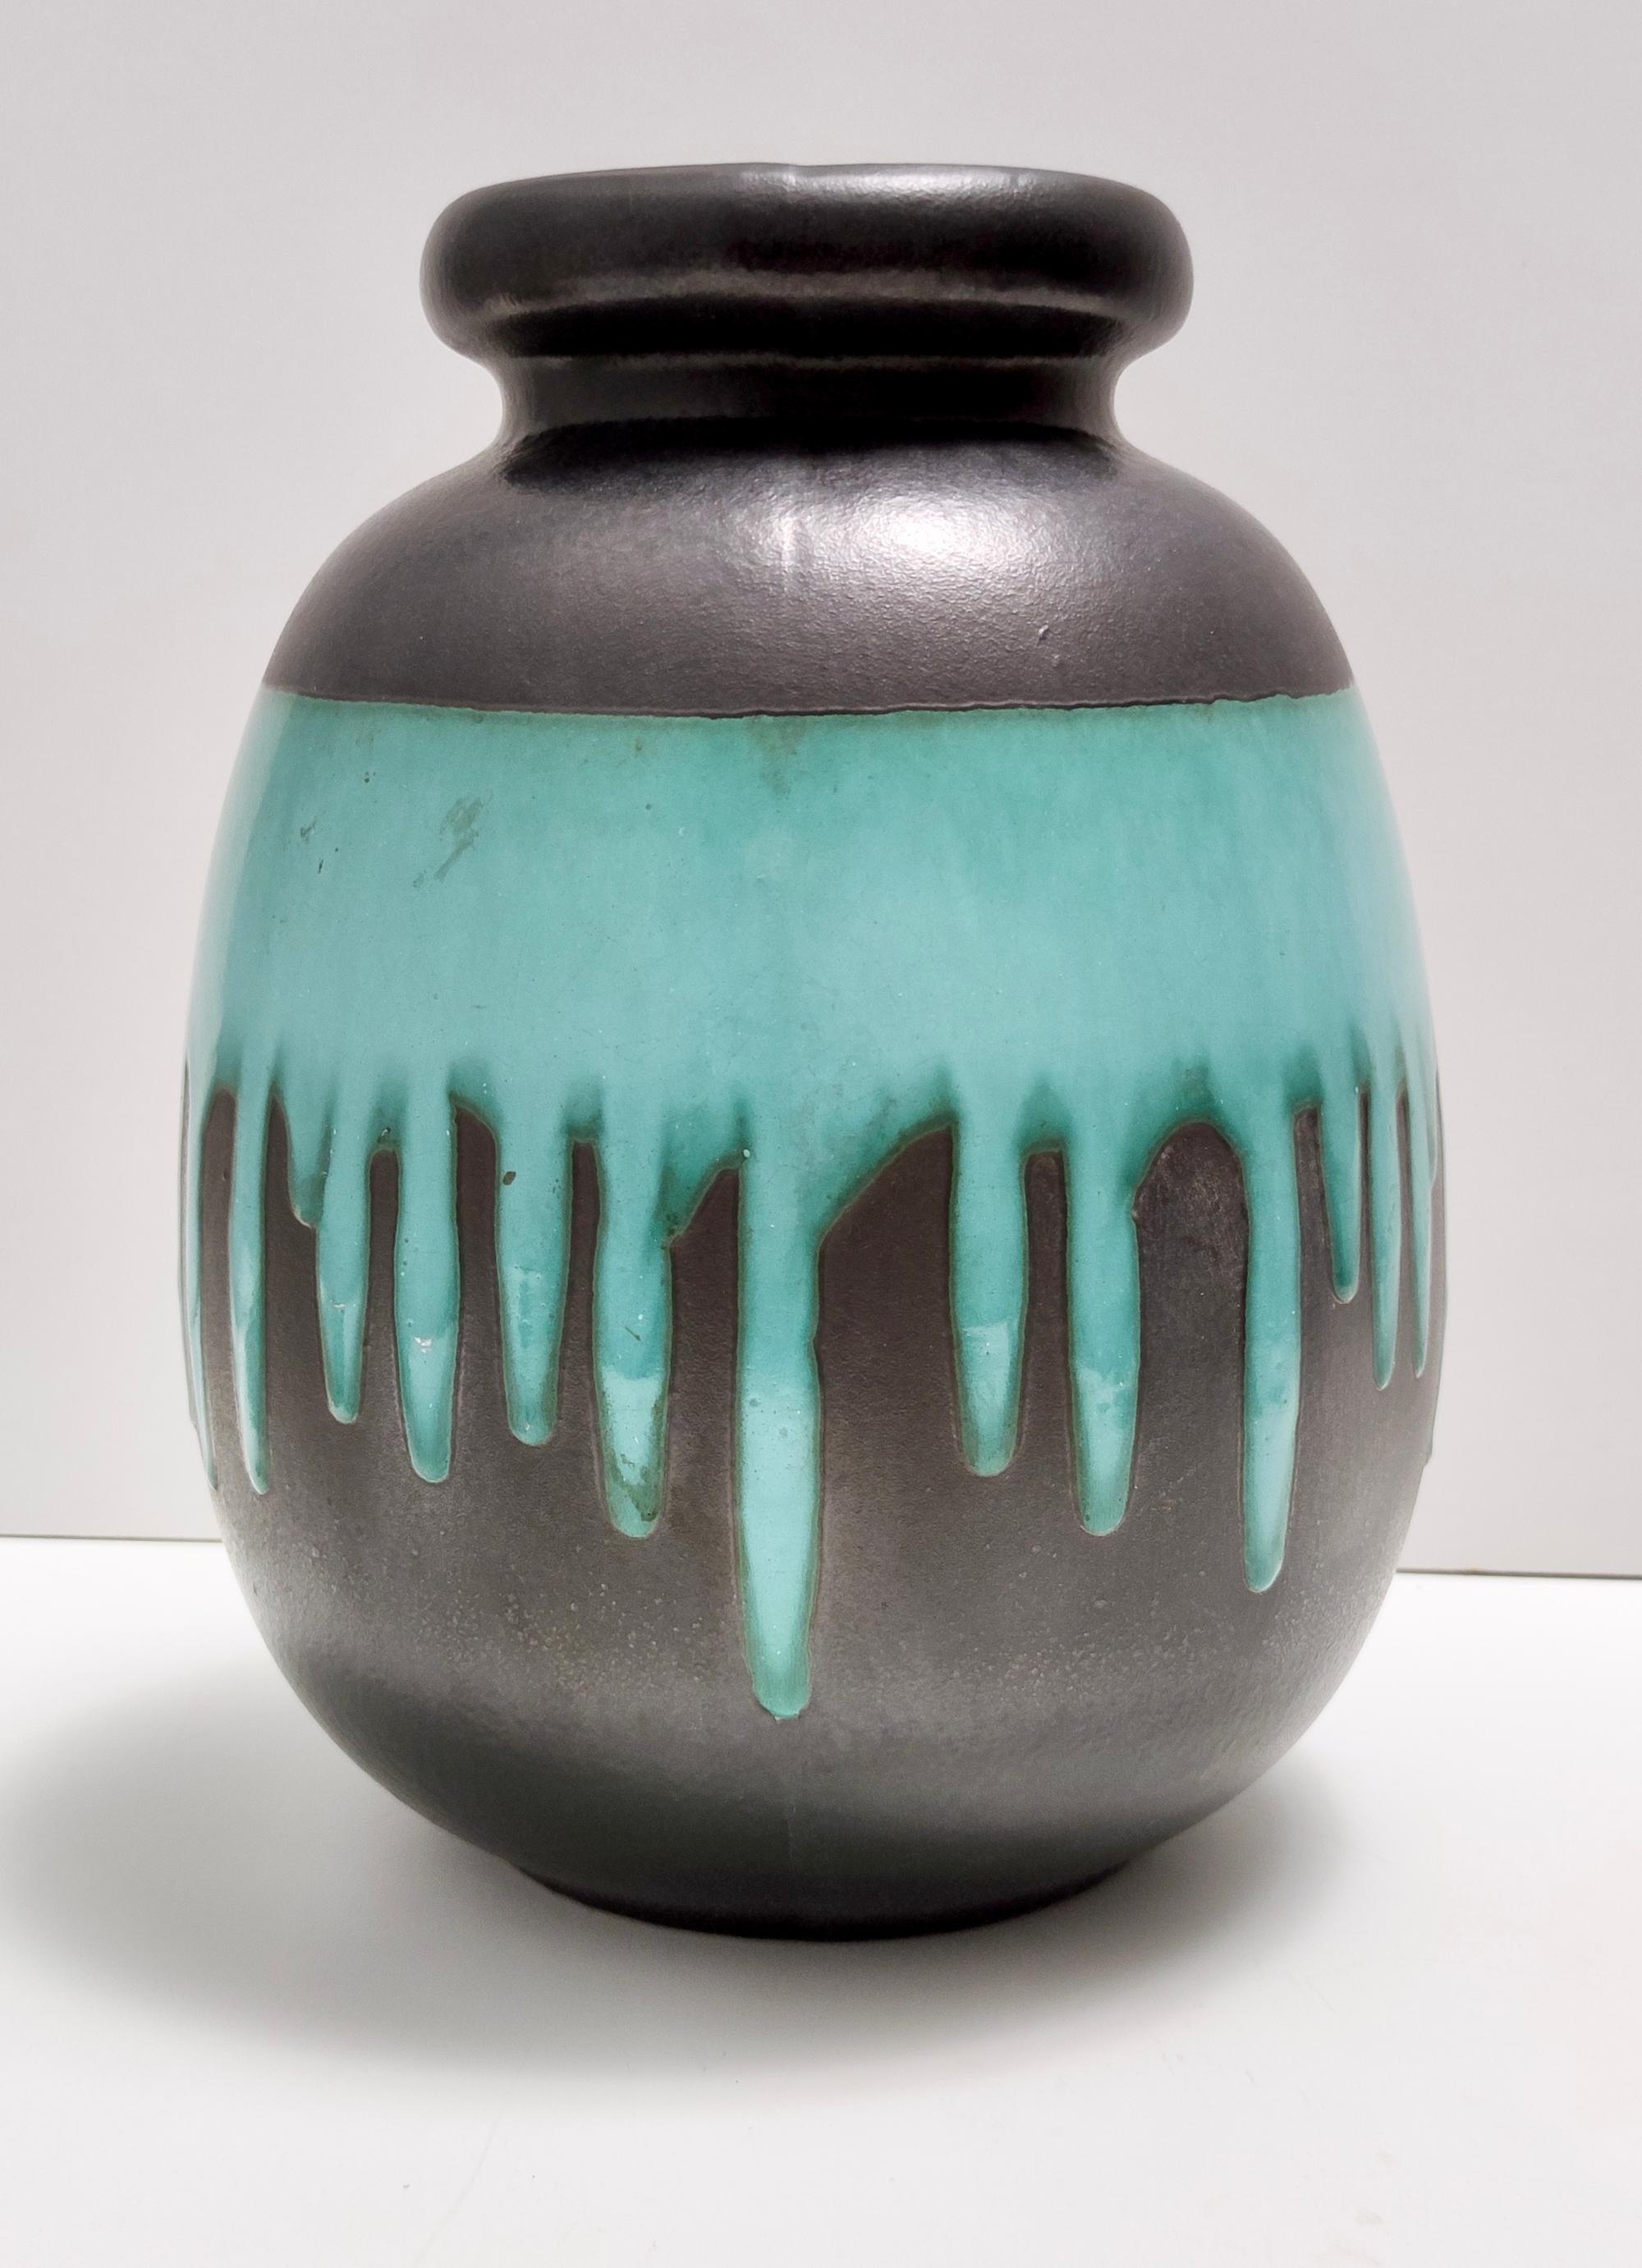 German Vintage Black and Teal Fat Lava Ceramic Vase Multi-Color 484-30 Scheurich WGP For Sale